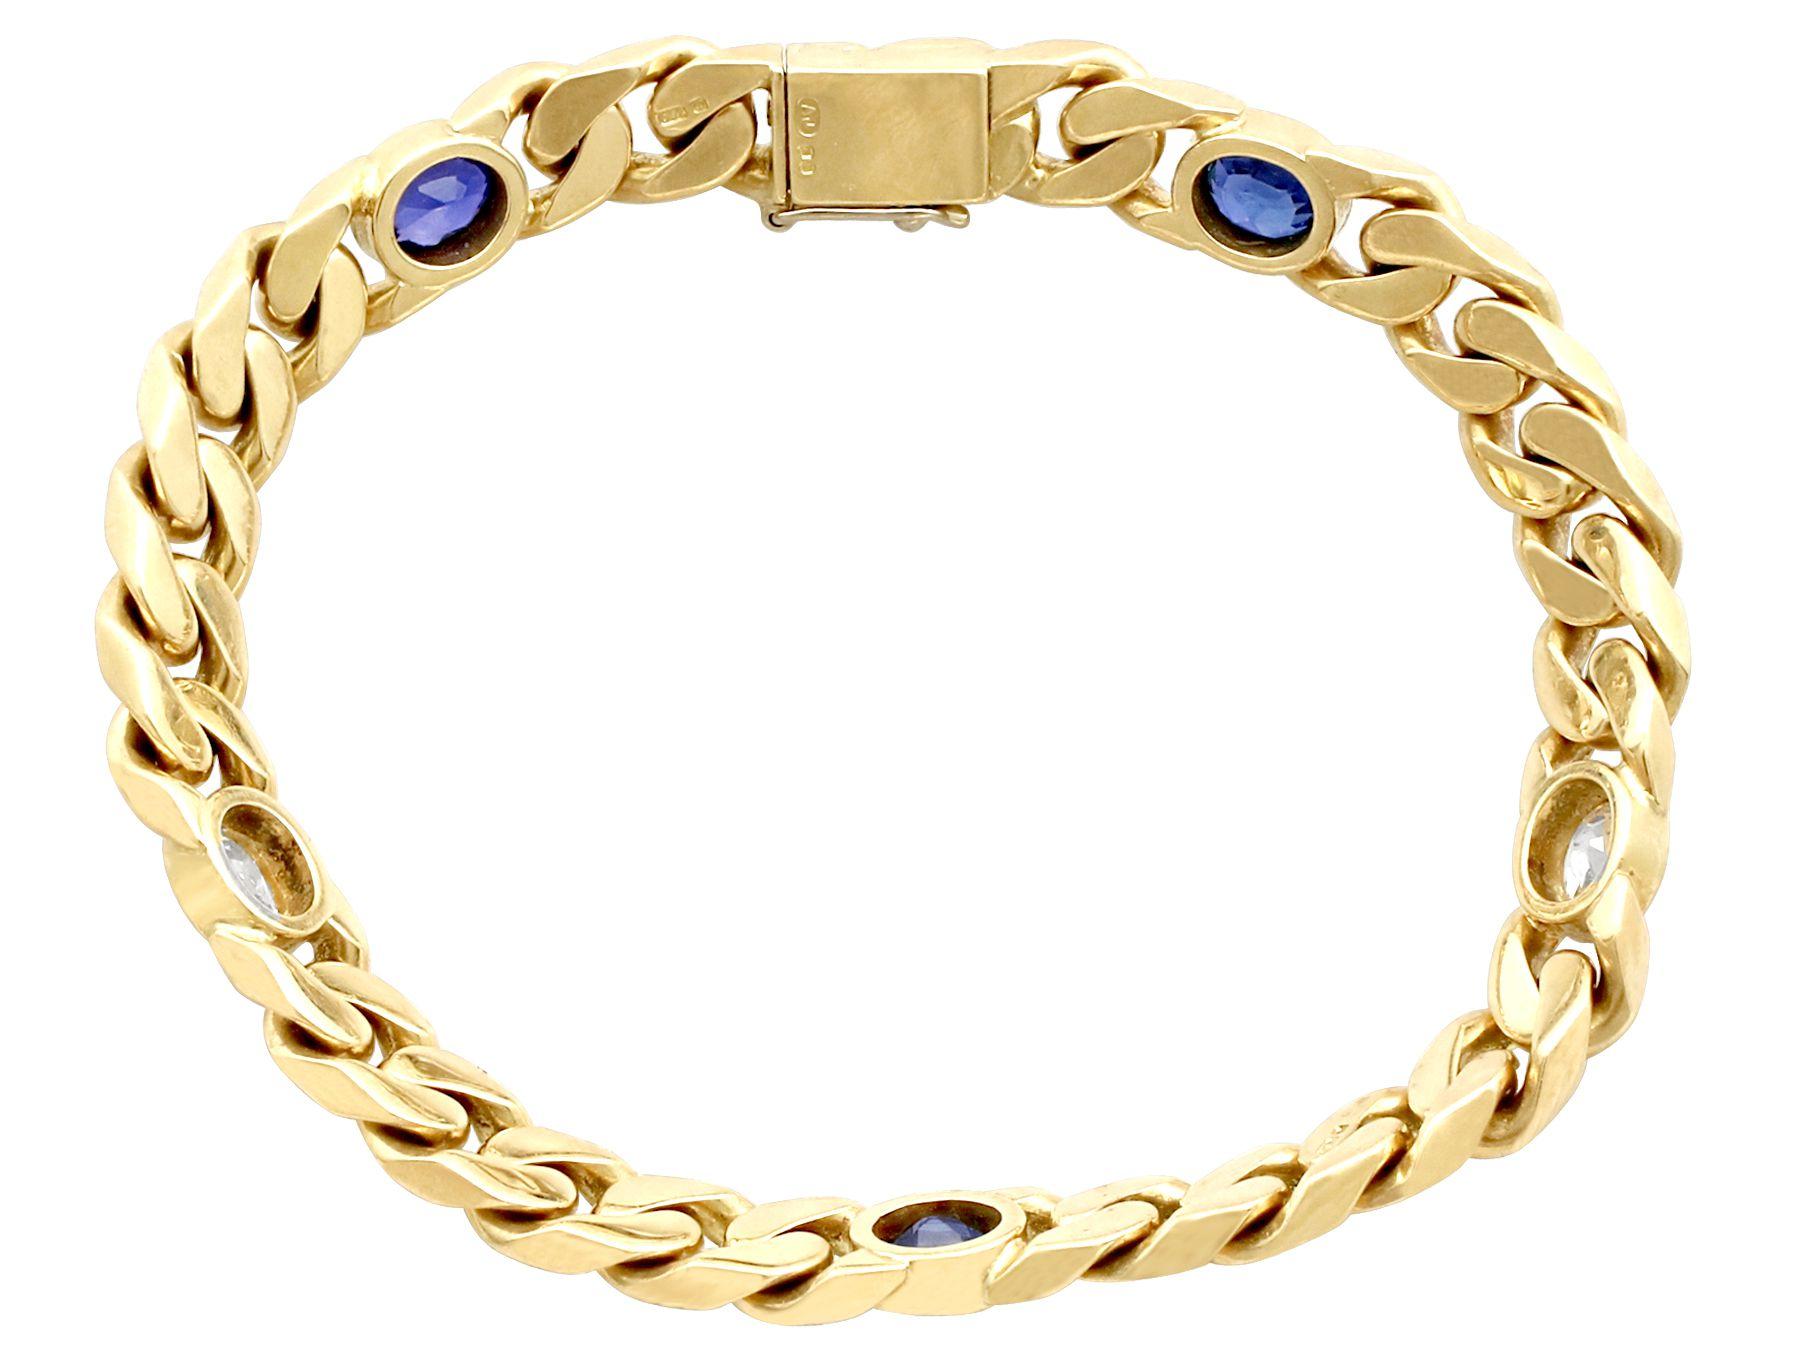 Oval Cut 1.30 Carat Sapphire and 1.02 Carat Diamond Yellow Gold Bracelet